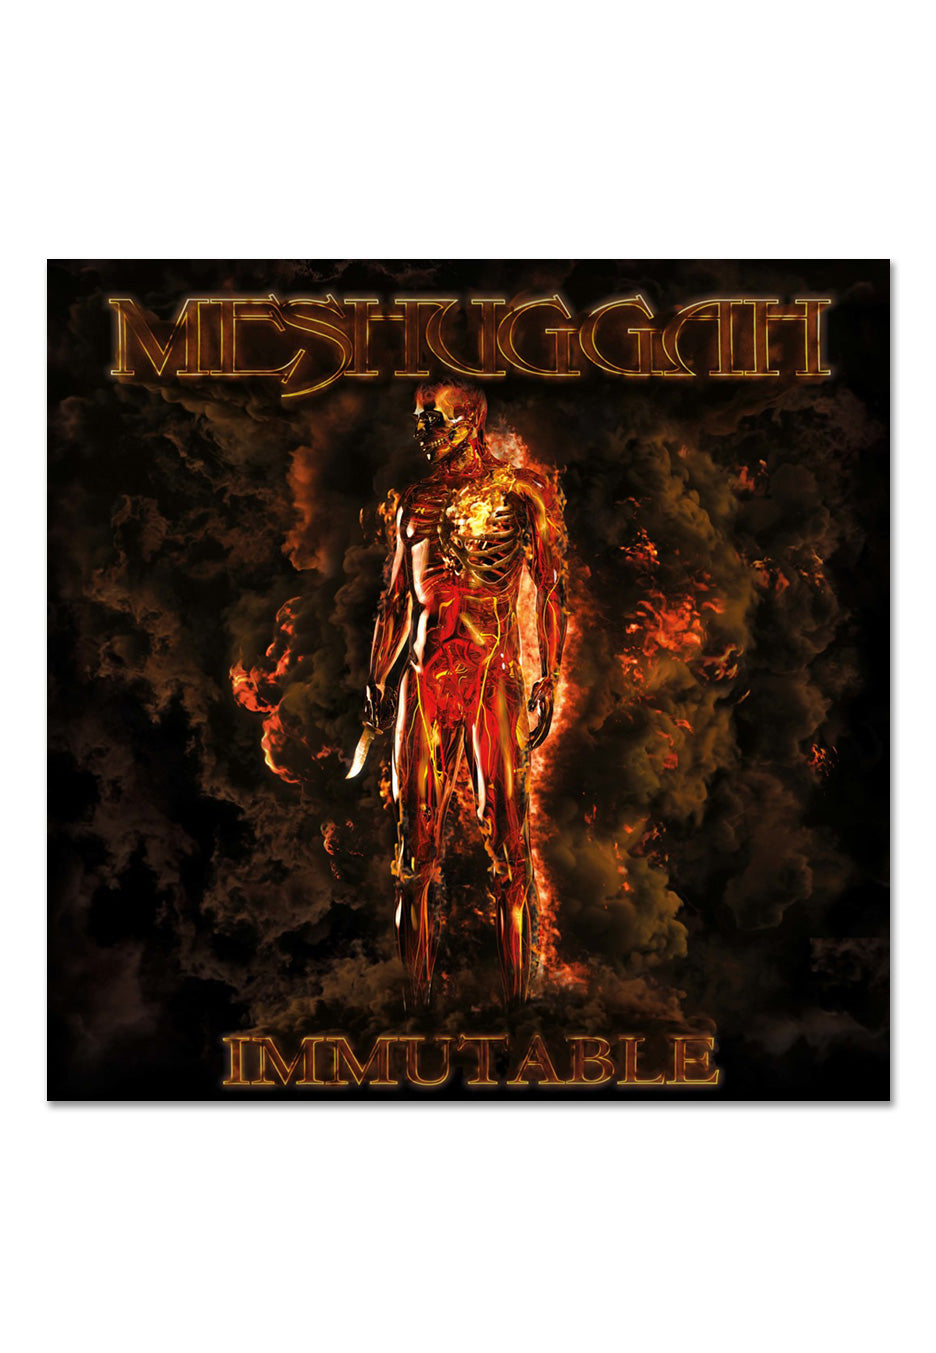 Meshuggah - Immutable Ltd. Orange/Black Circle - Colored 2 Vinyl